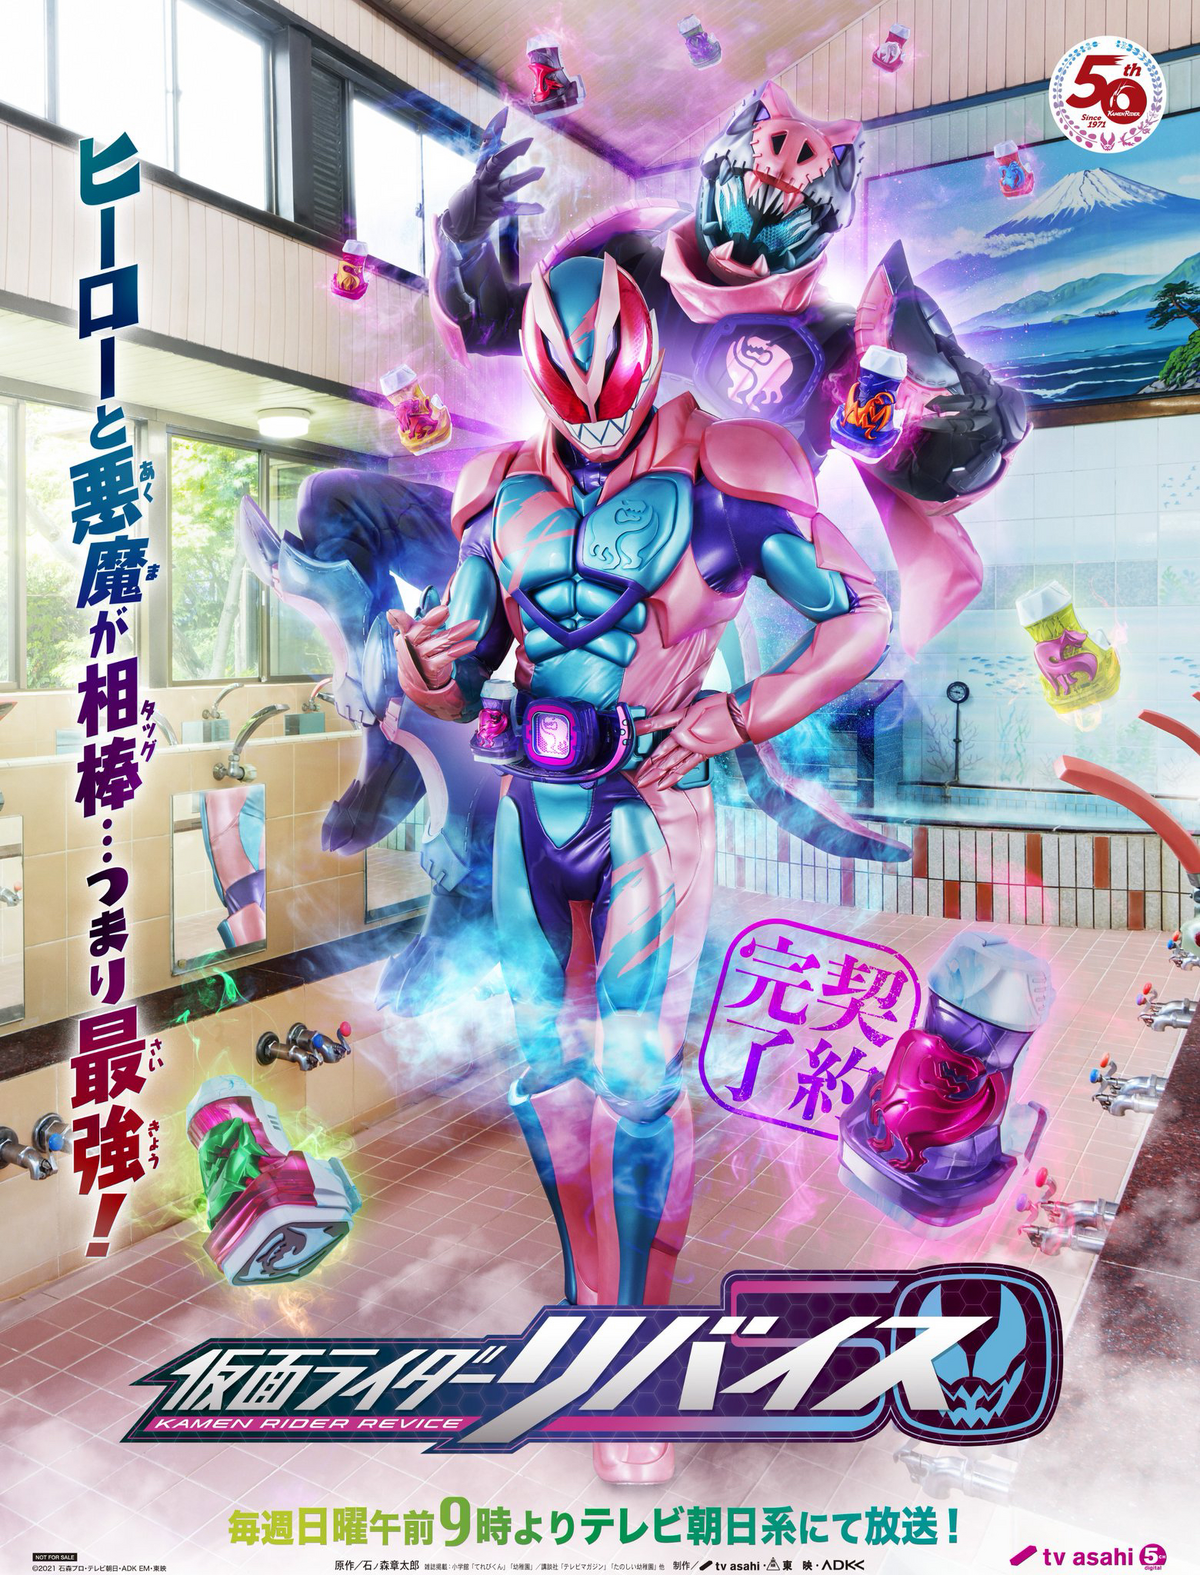 Fuuto PI: The STAGE, Kamen Rider Wiki